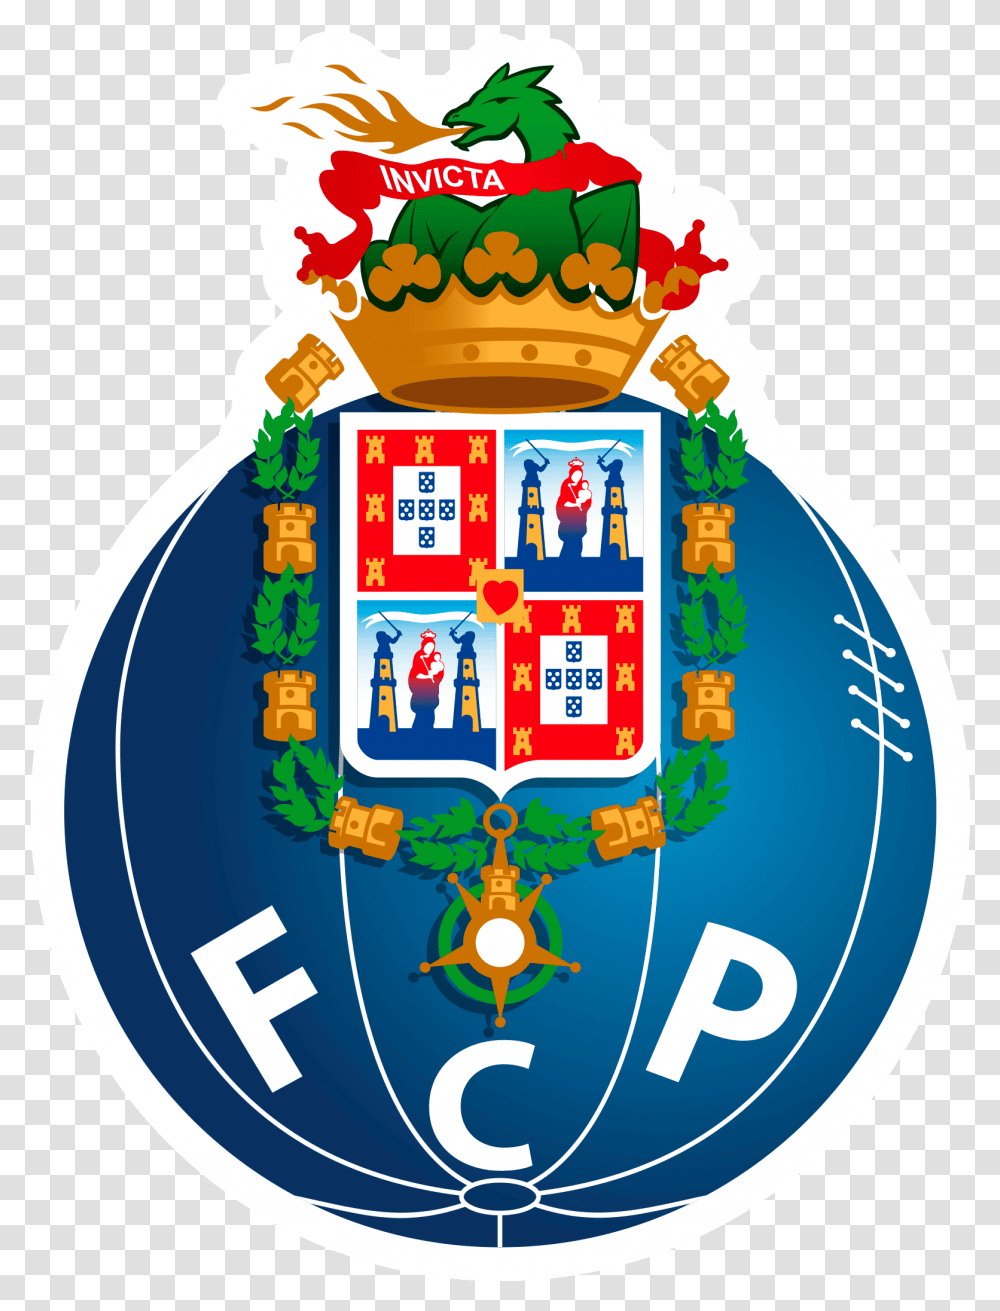 Porto Logo The Most Famous Brands And Company Logos In Fc Porto Logo, Symbol, Trademark, Emblem, Badge Transparent Png